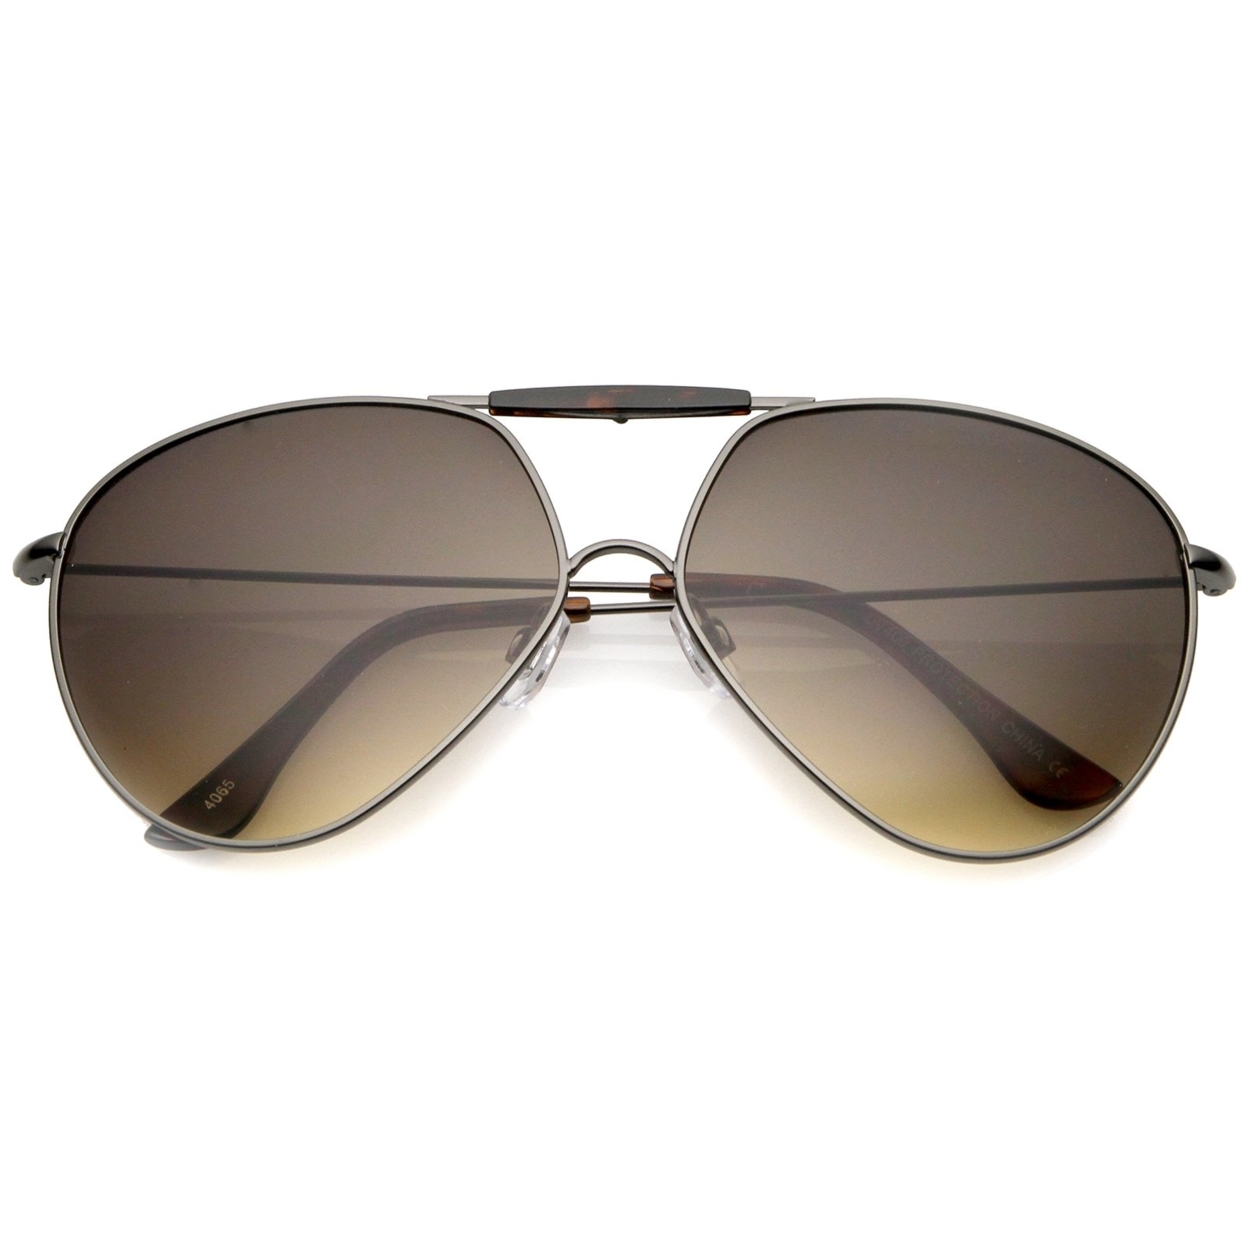 Casual Brow Bar Detail Slim Temple Metal Frame Aviator Sunglasses 62mm - Silver-Black / Lavender